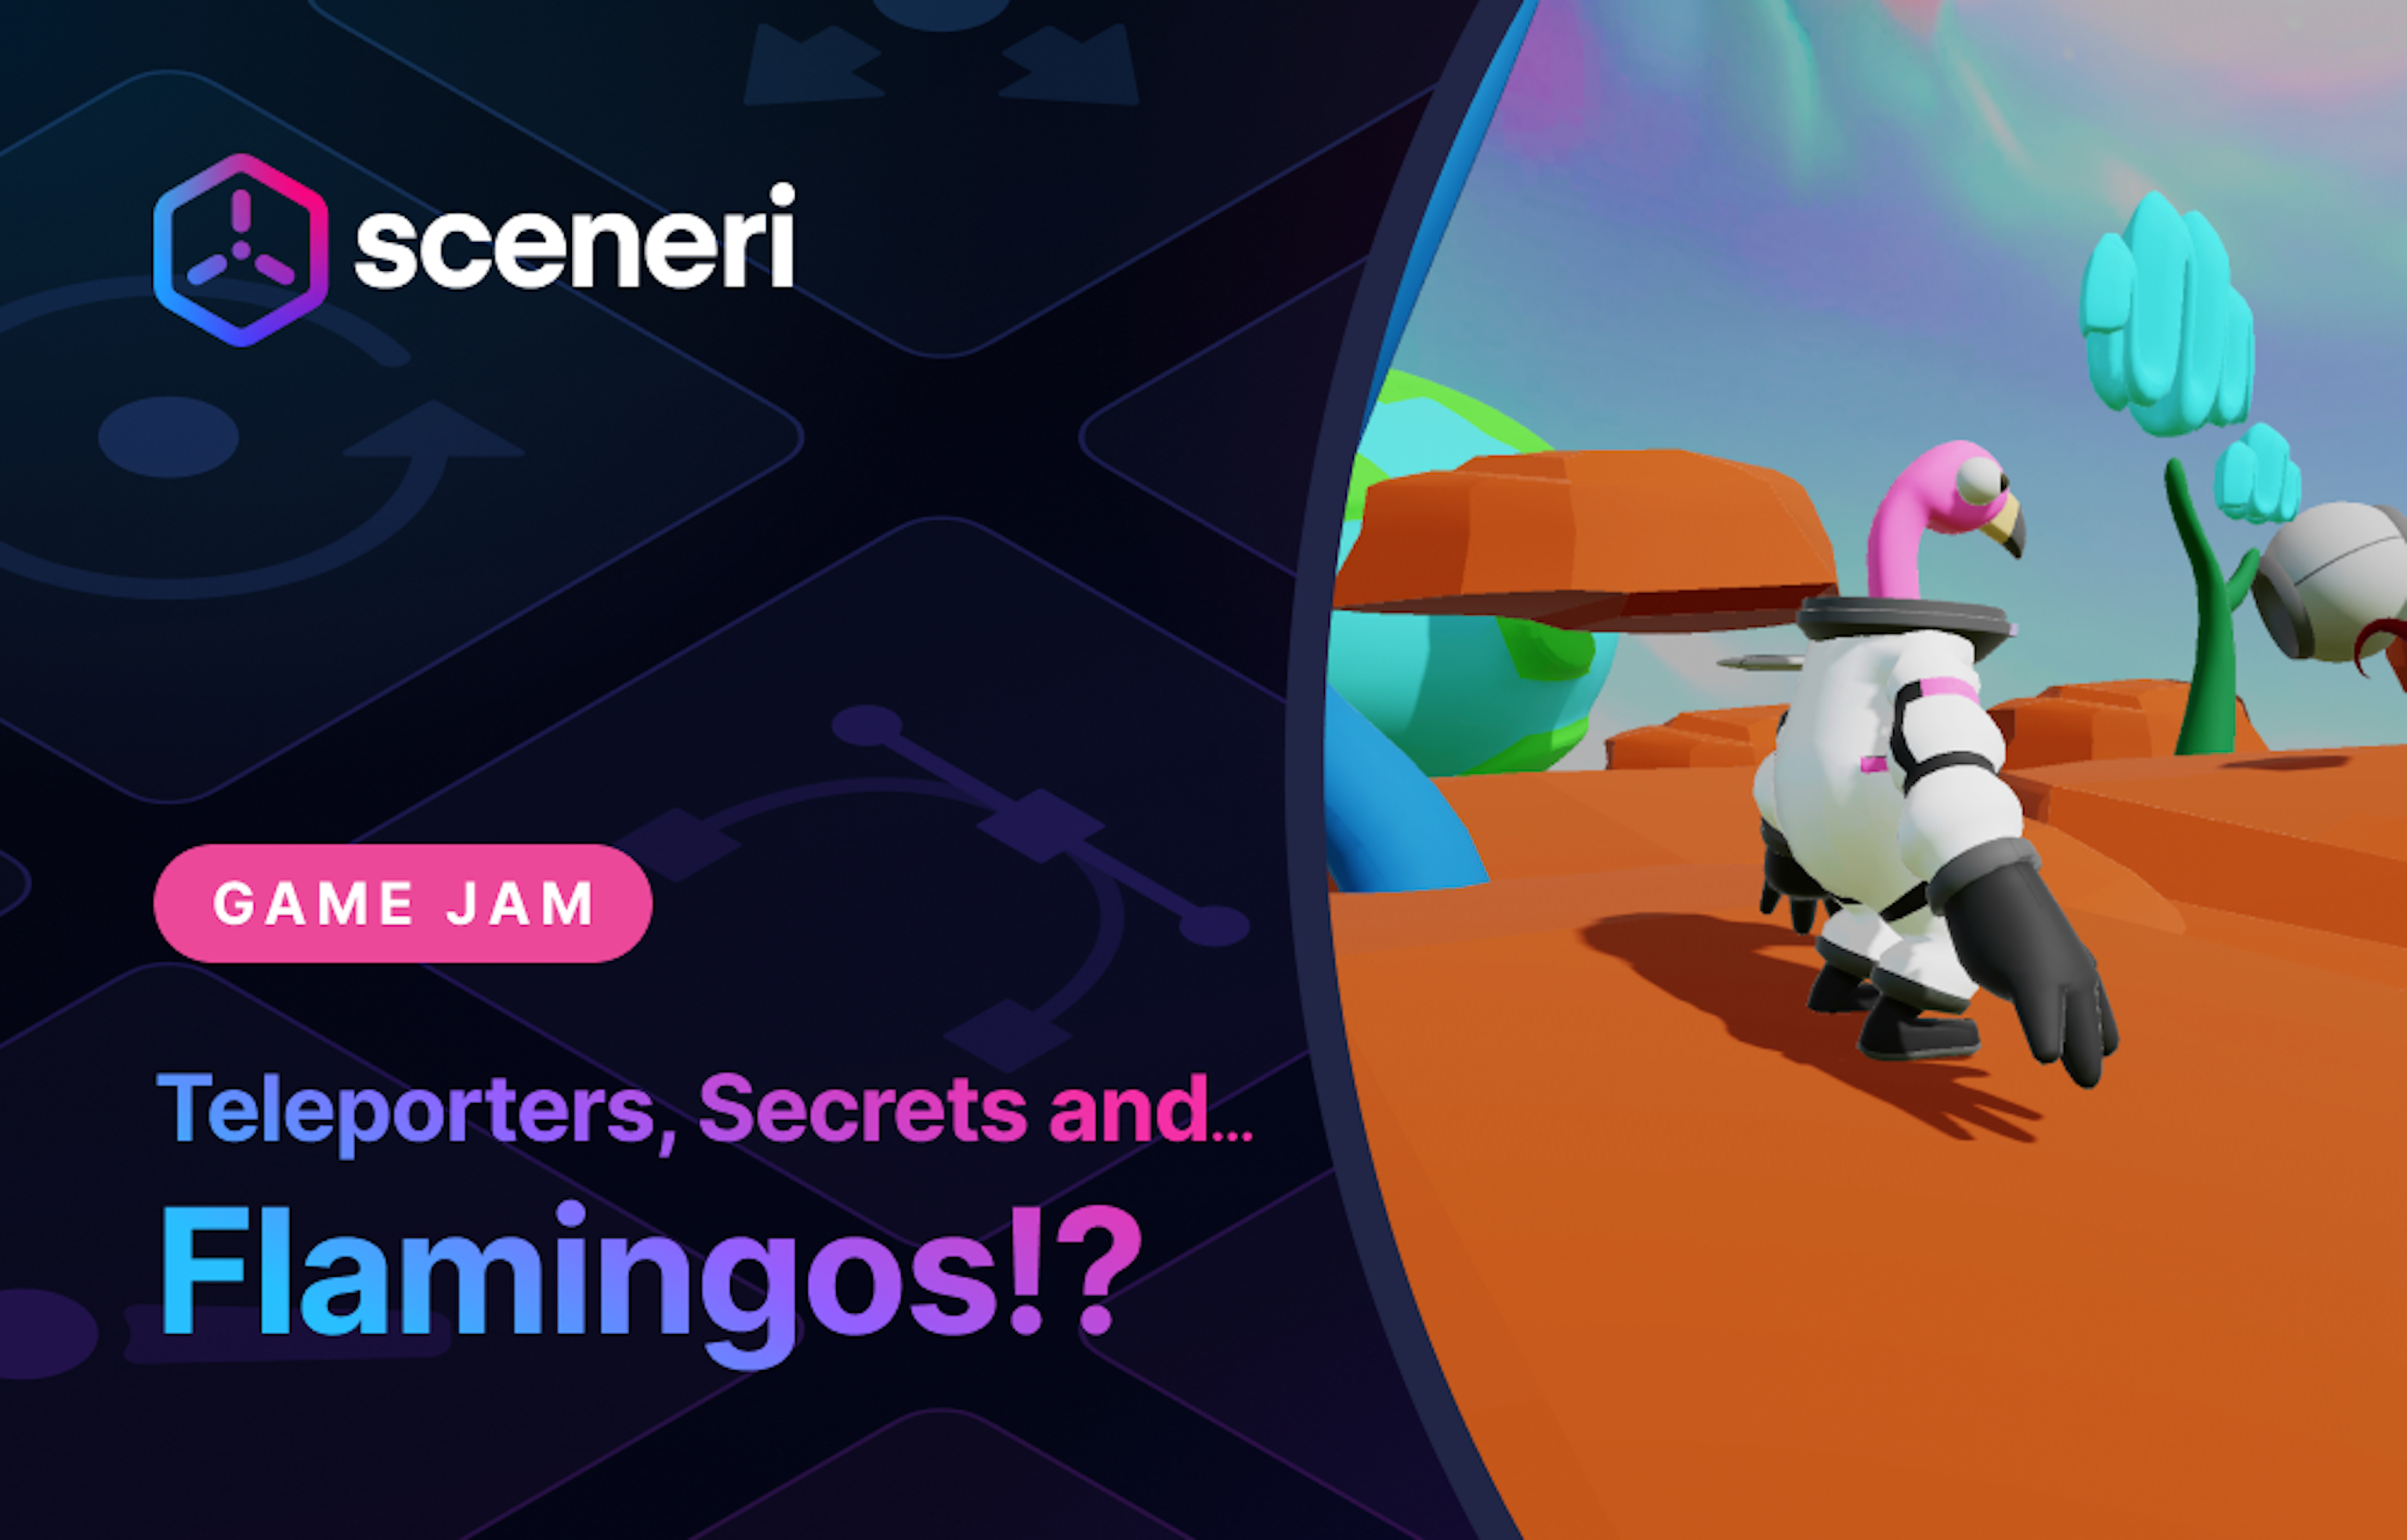 Sceneri Team Game Jam: Teleporters, Secrets and... Flamingos!?